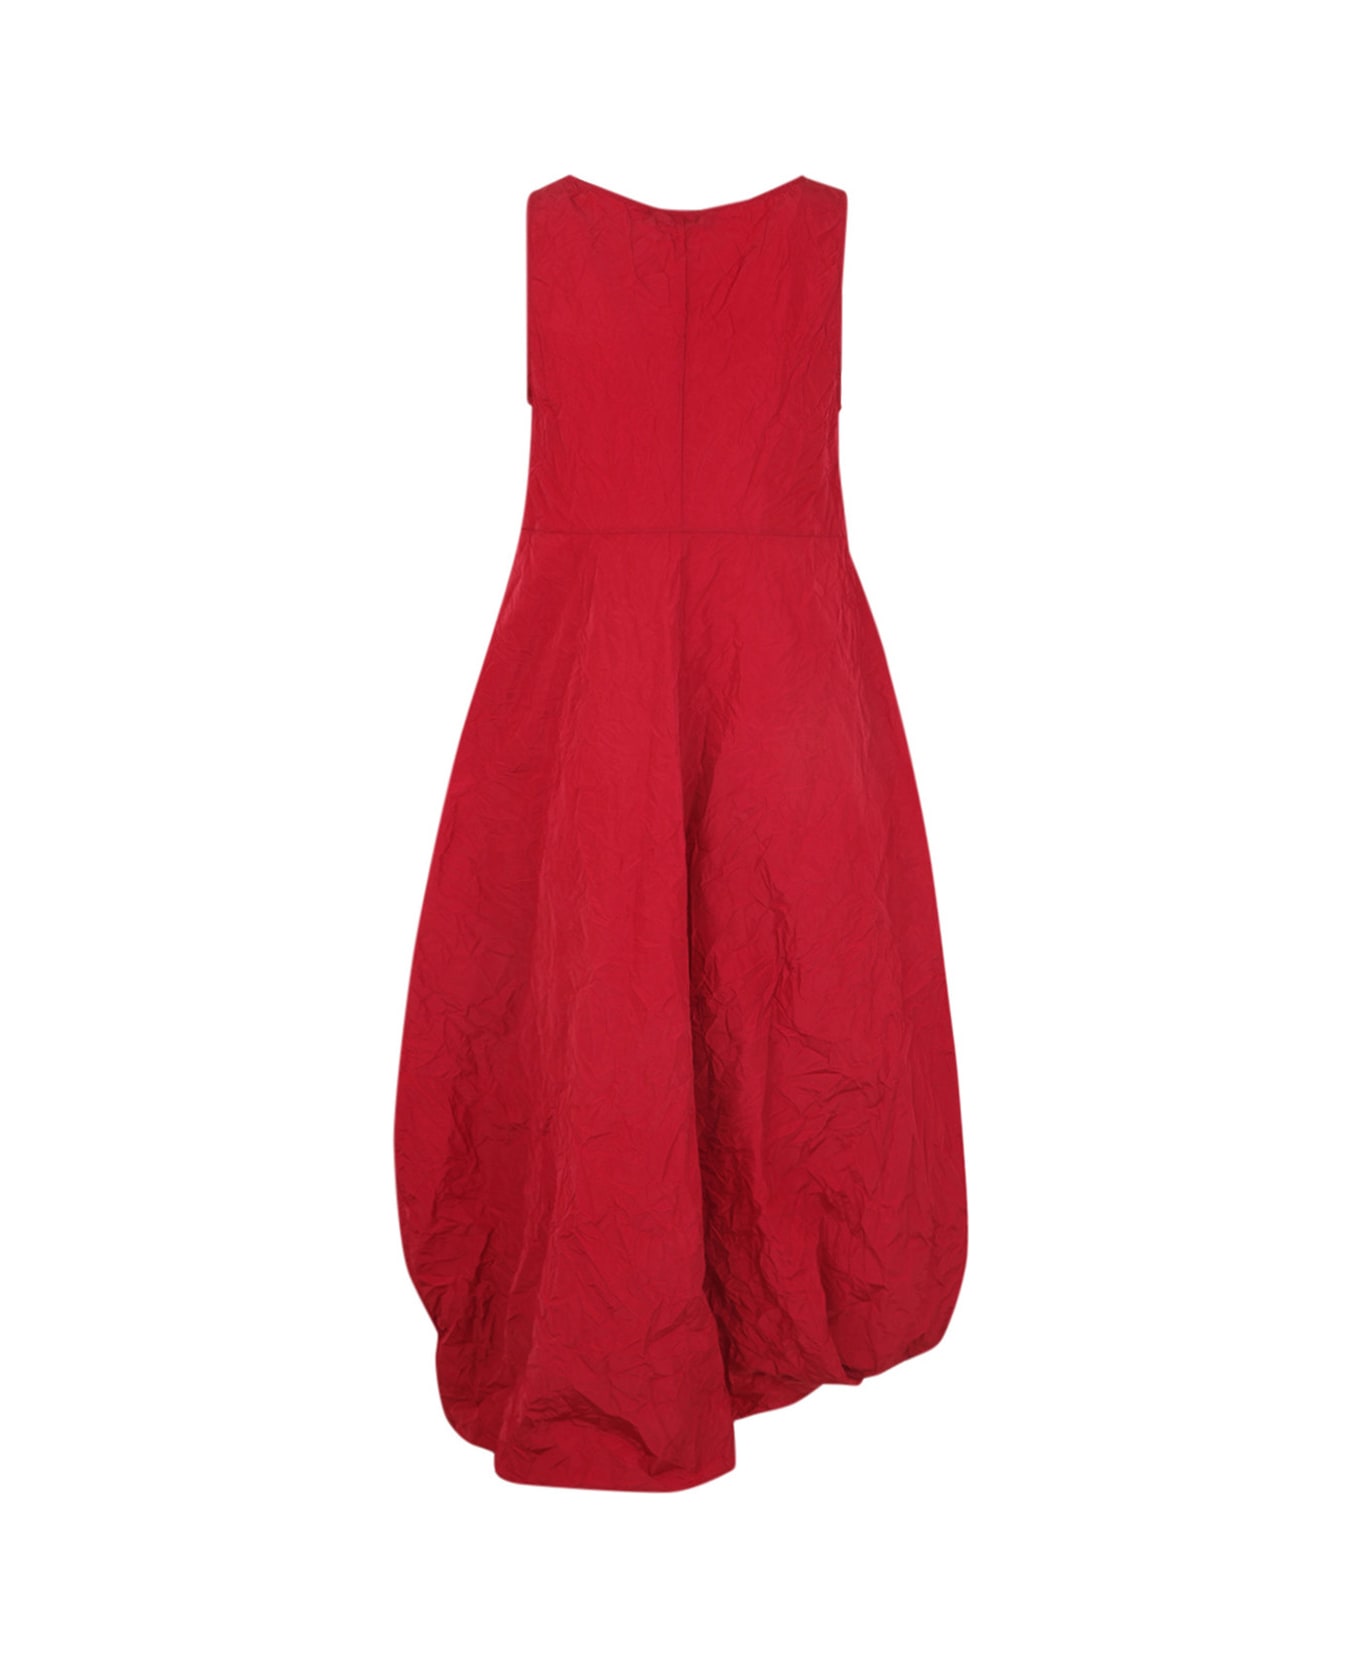 Maria Calderara Marionetta Crinkled Opaque Taffeta Long Dress - Ruby Red